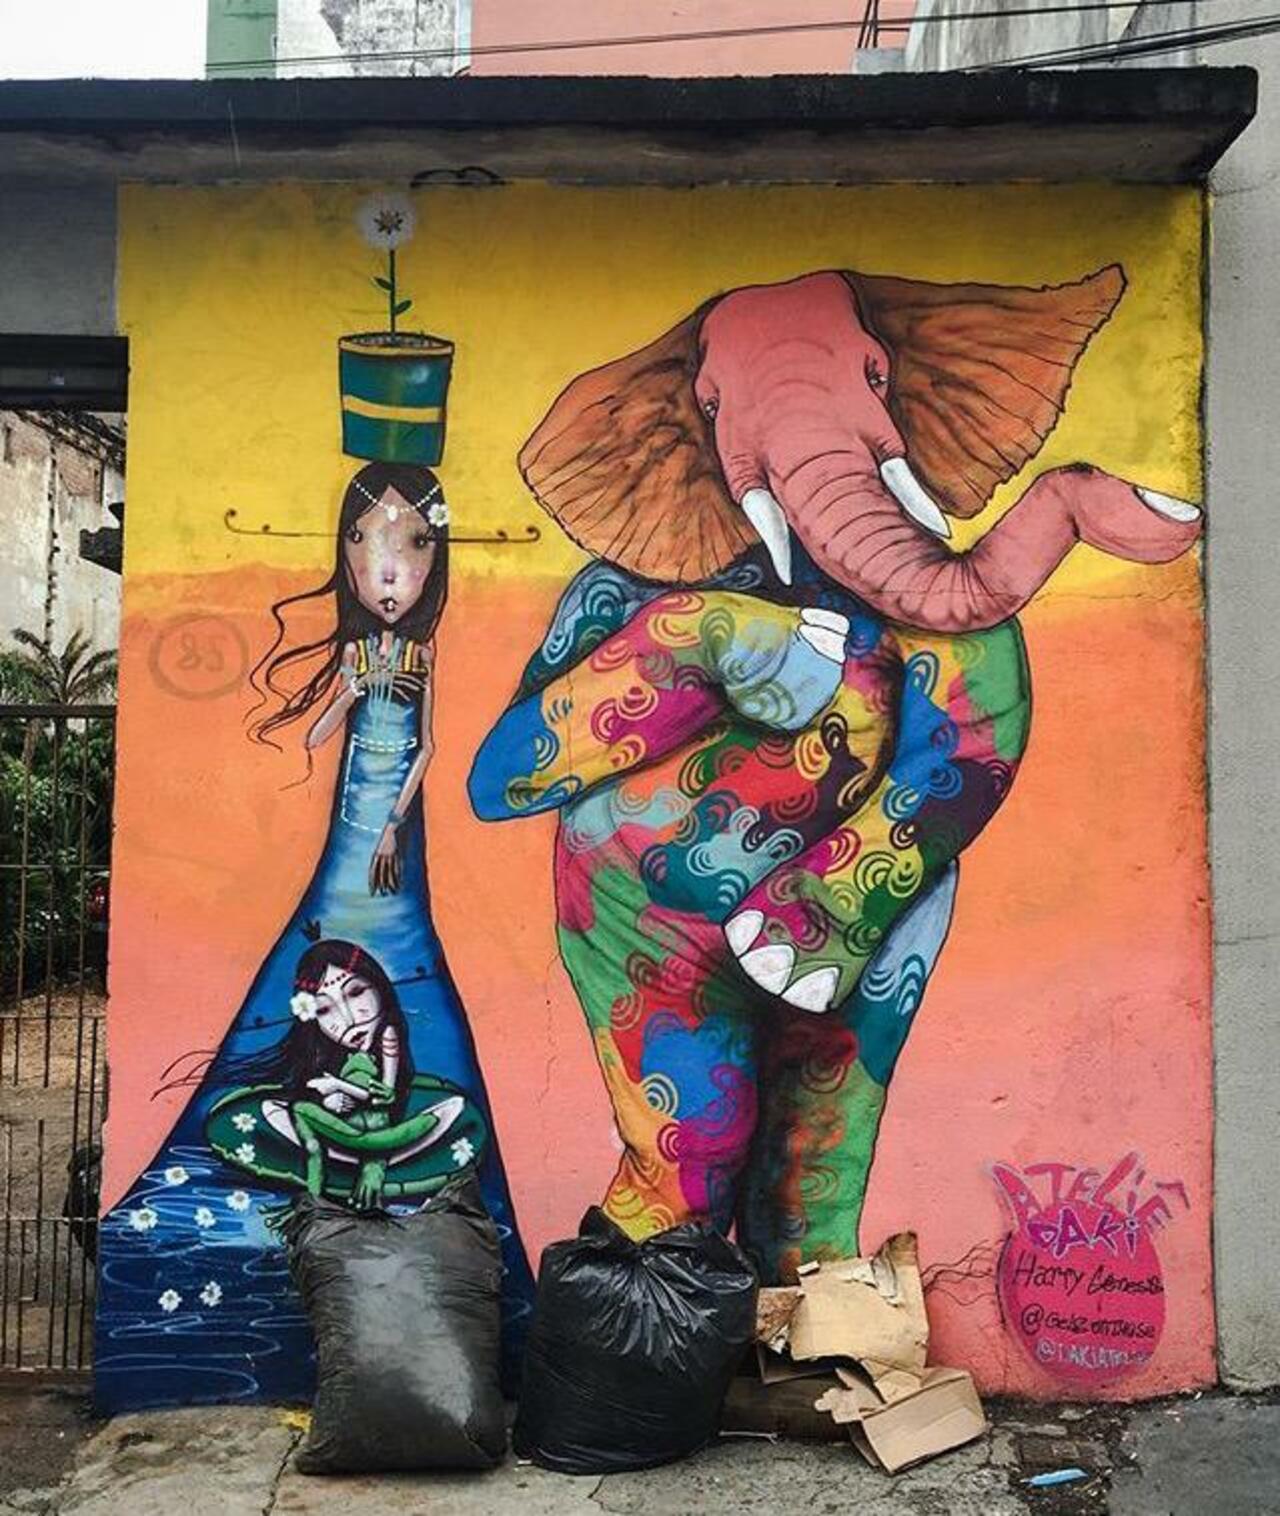 Street Art by Harry Geneis & Gelson in São Paulo 

#art #mural #graffiti #streetart http://t.co/CHYmFKb0WN